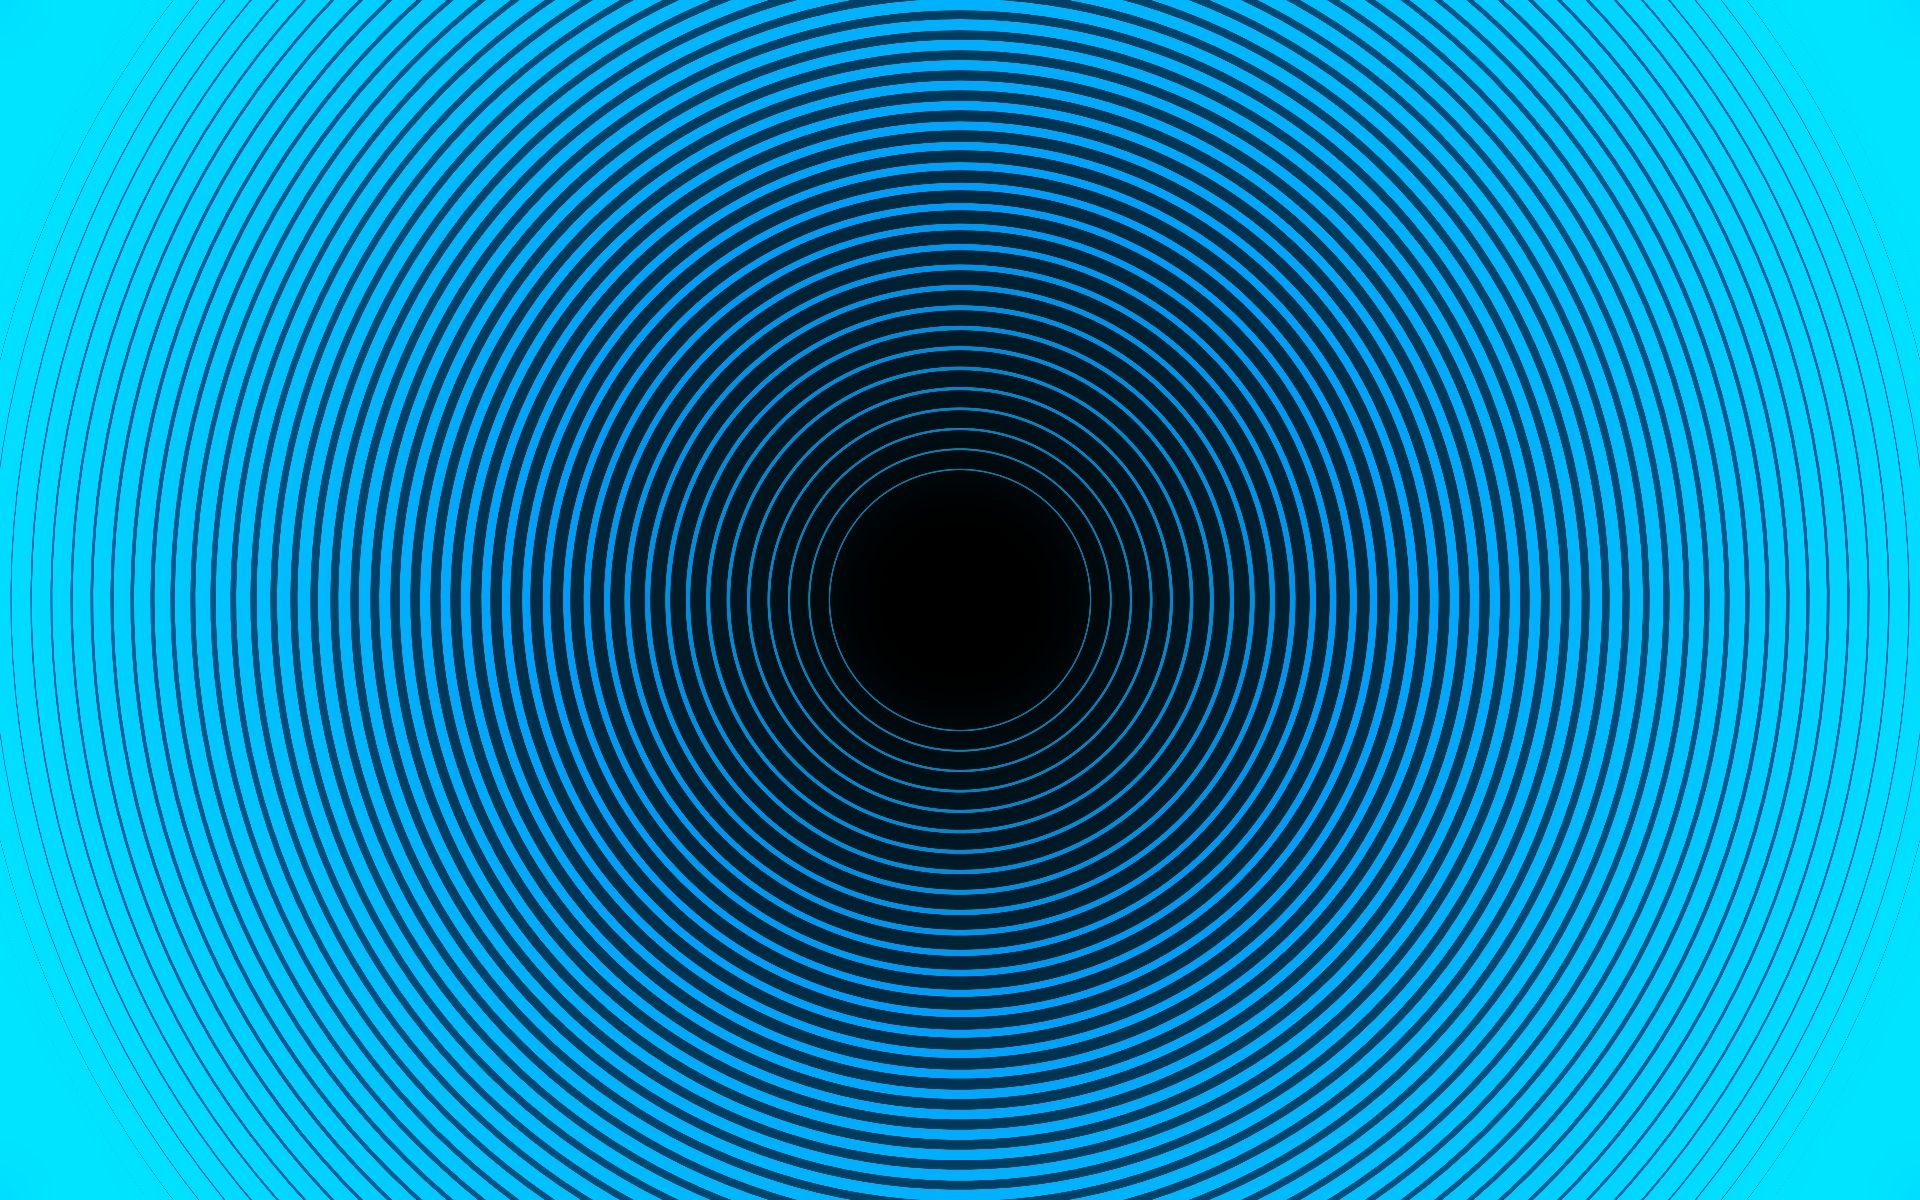 blue-optical-illusion-wallpaper-44010-45105-hd-wallpapers.jpg